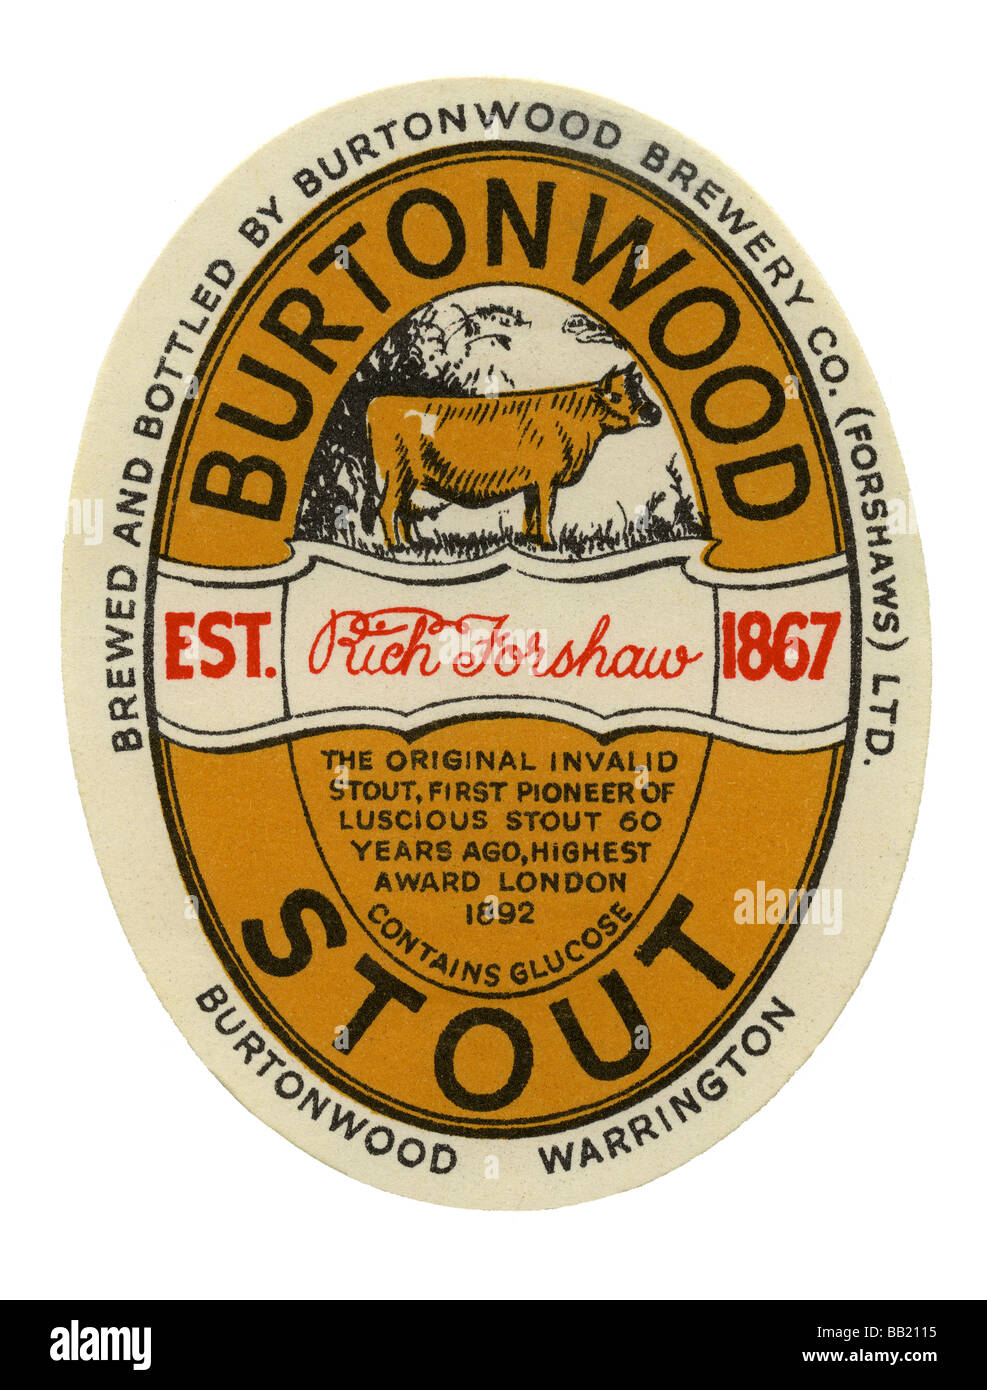 England Warrington Forshaws Burtonwood Brewery Vintage Label Bola-Cola 